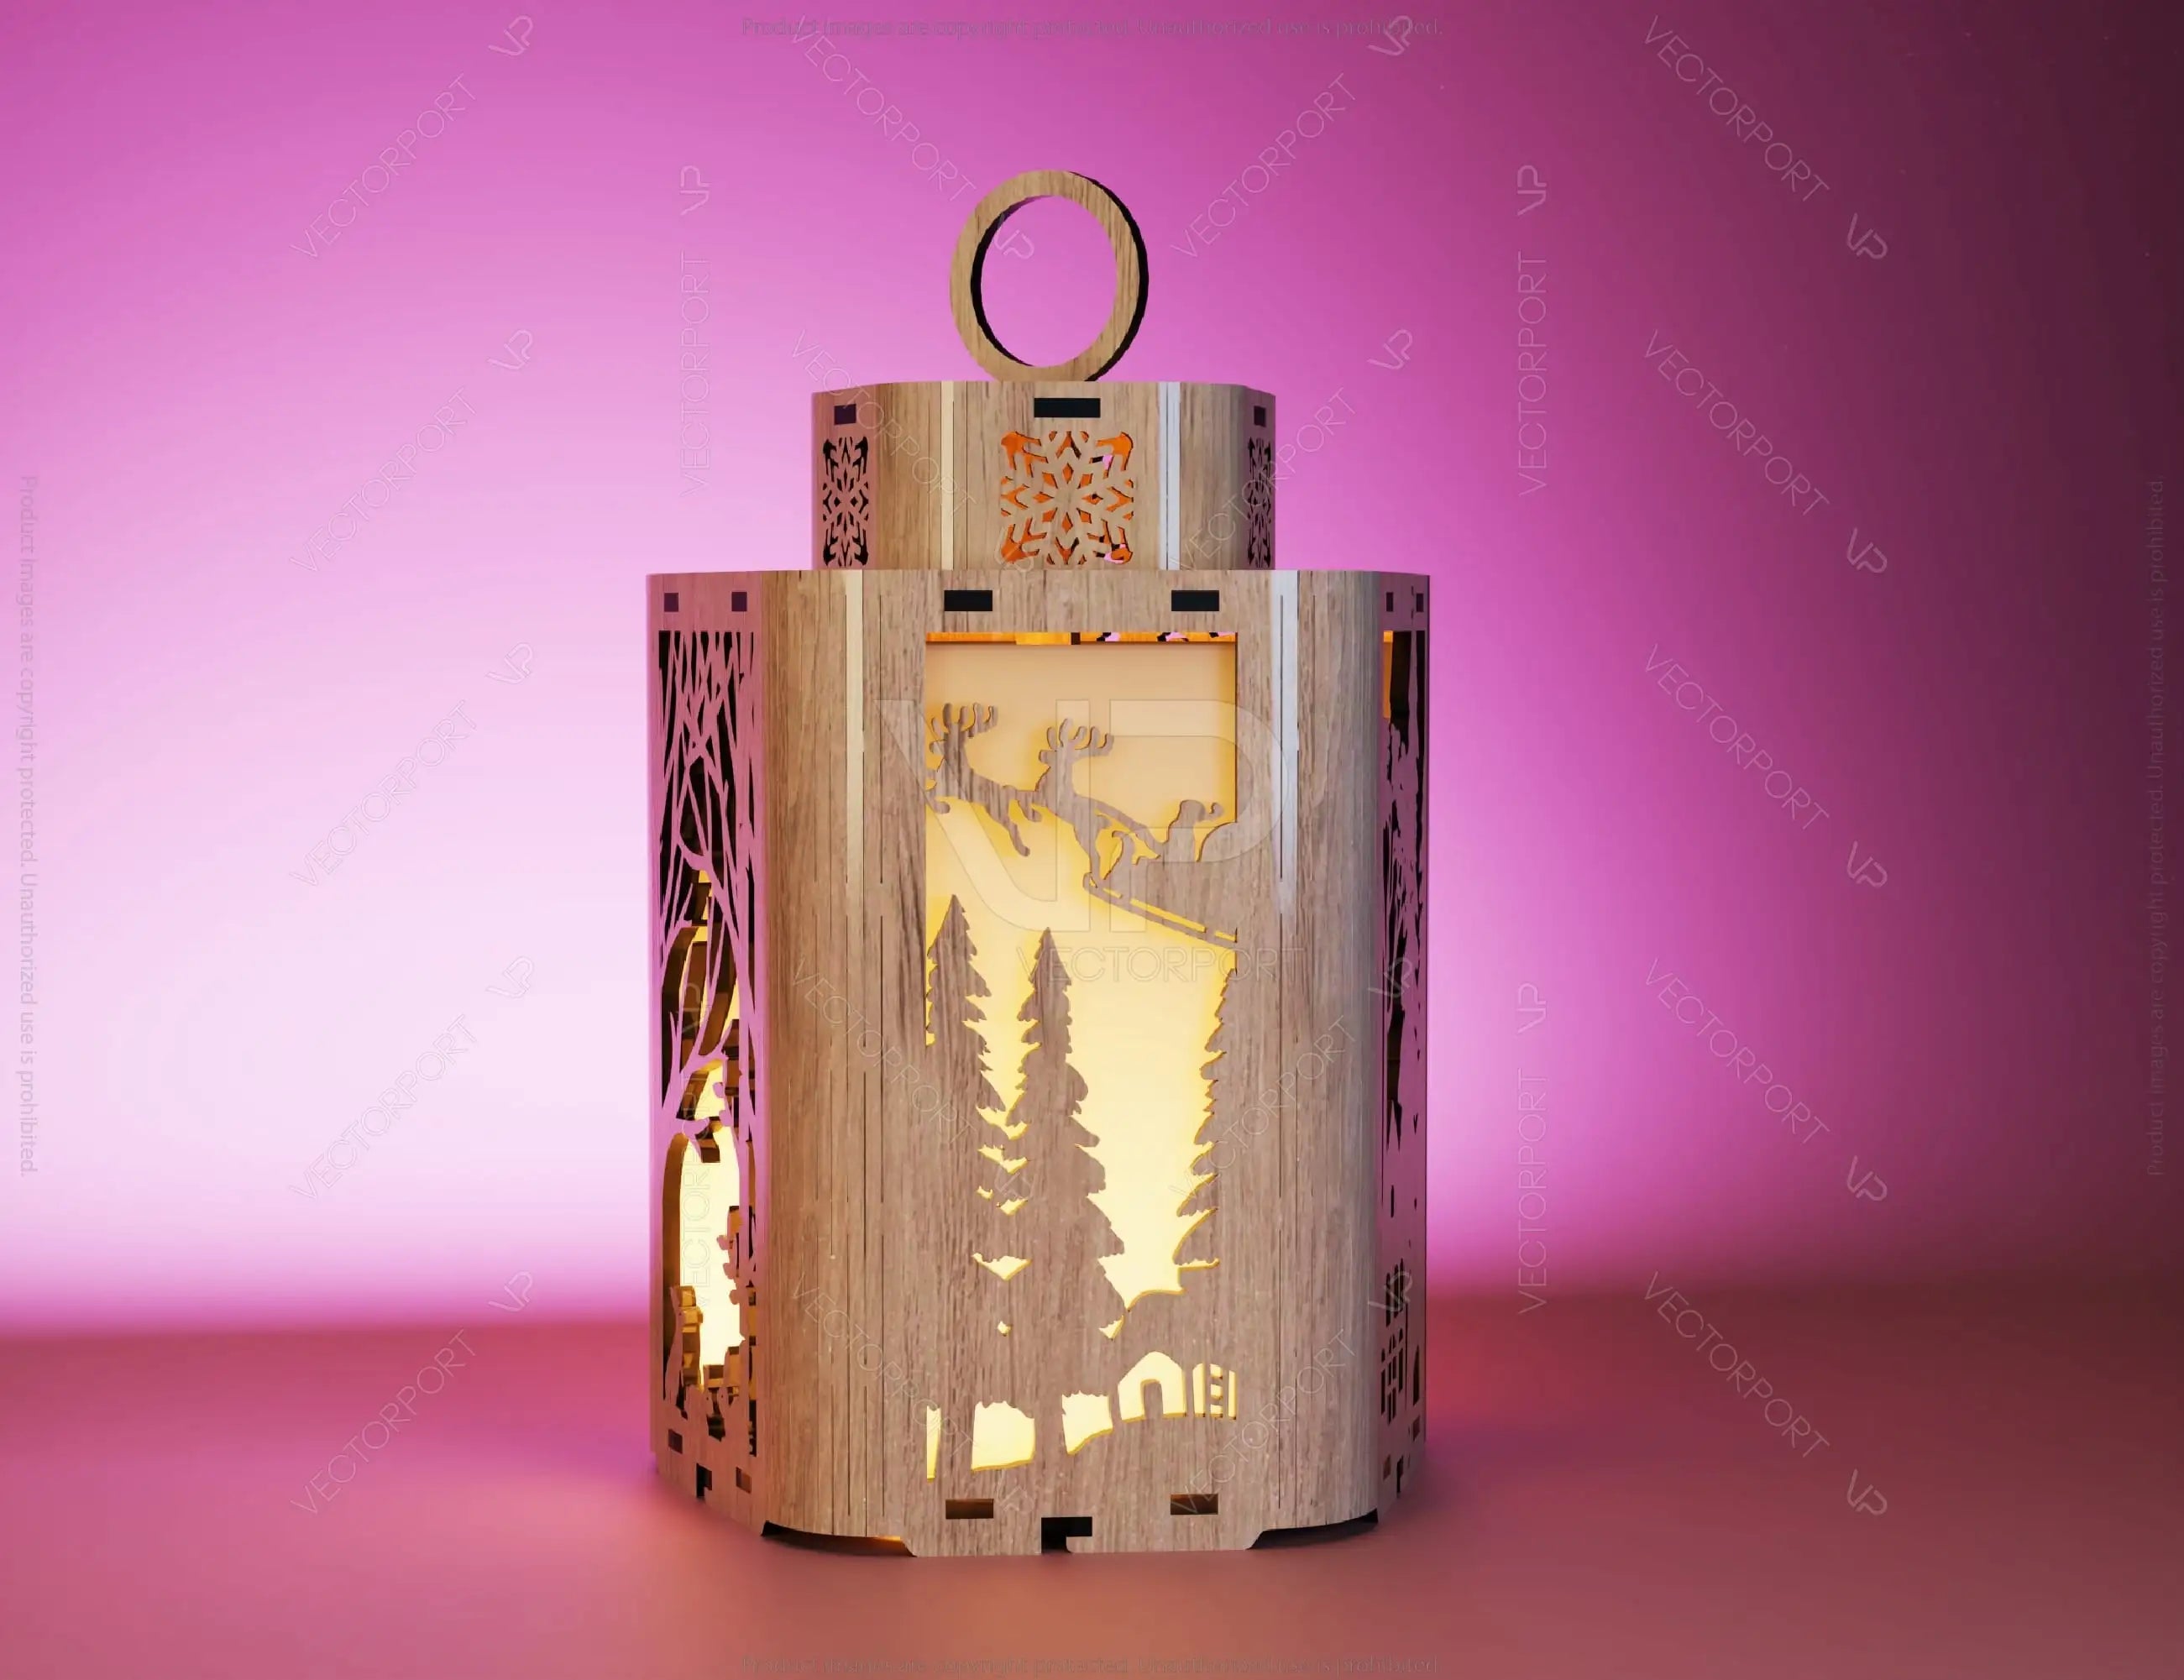 New Year Christmas Lamp Night Light Deer Lantern Decoration Hanging Curved Corner Candle Holder Digital Download |#U291|